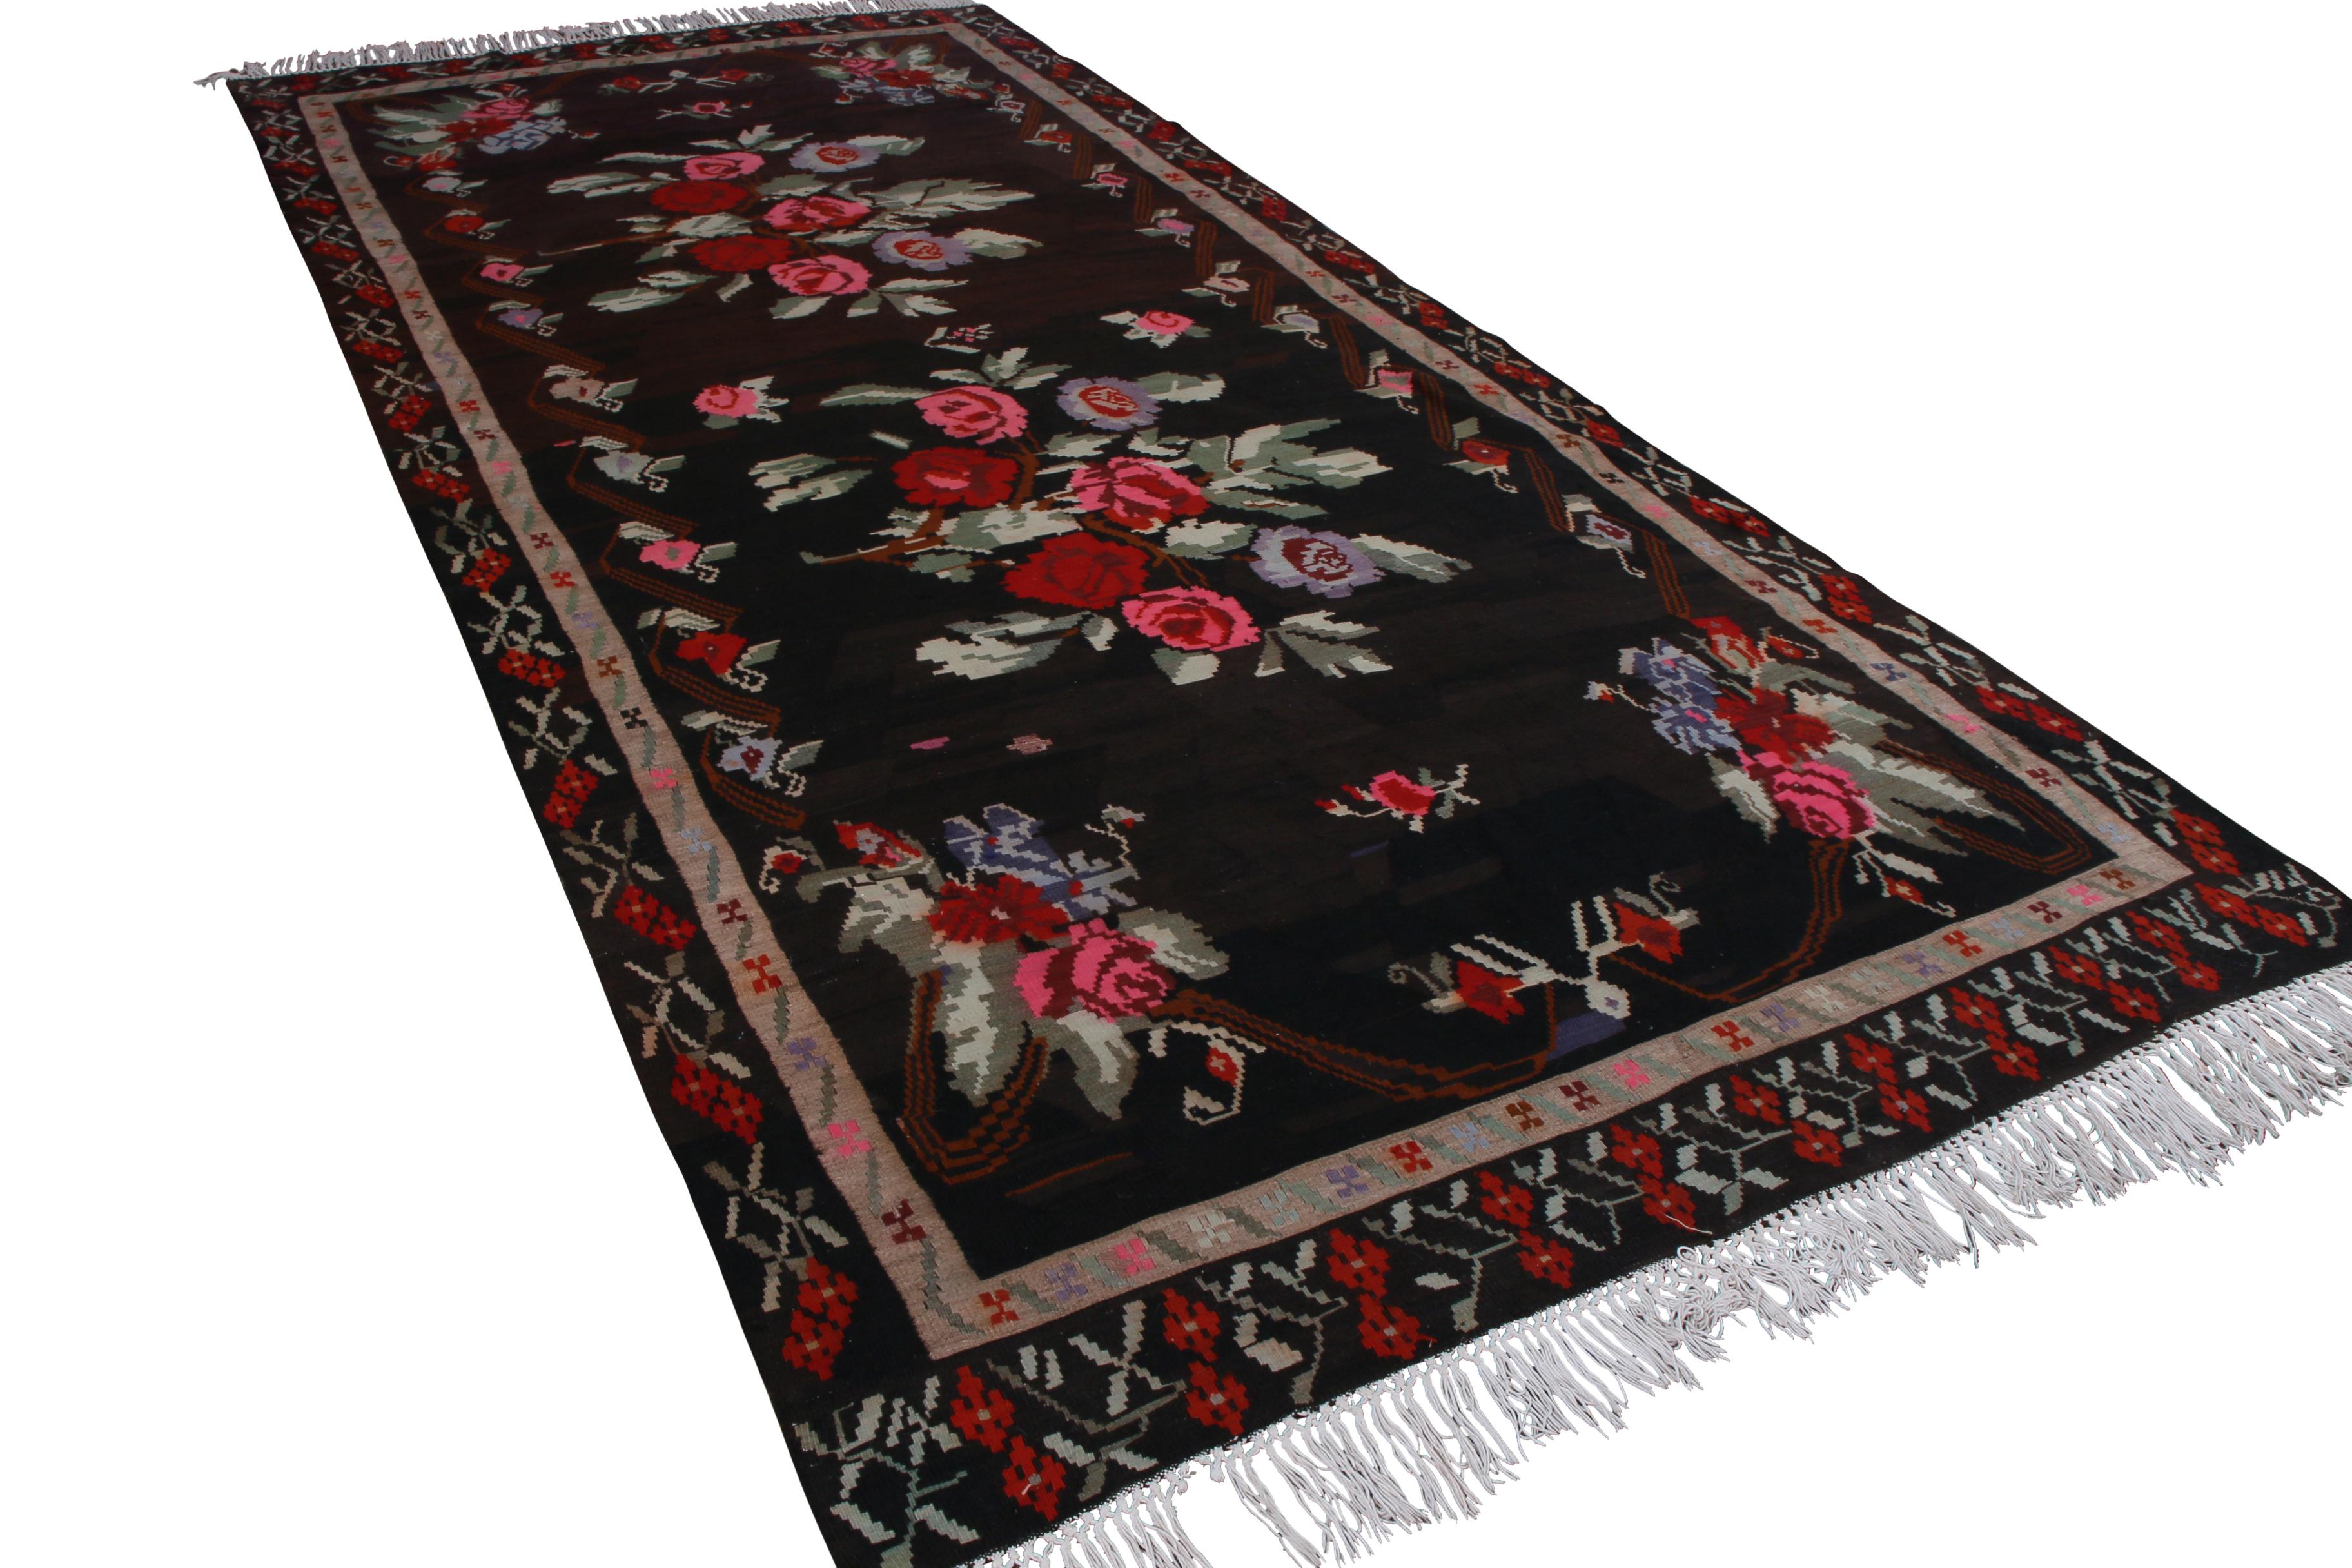 Hand-Woven Midcentury Vintage Kilim Rug Black Red Floral Turkish Flat-Weave by Rug & Kilim For Sale